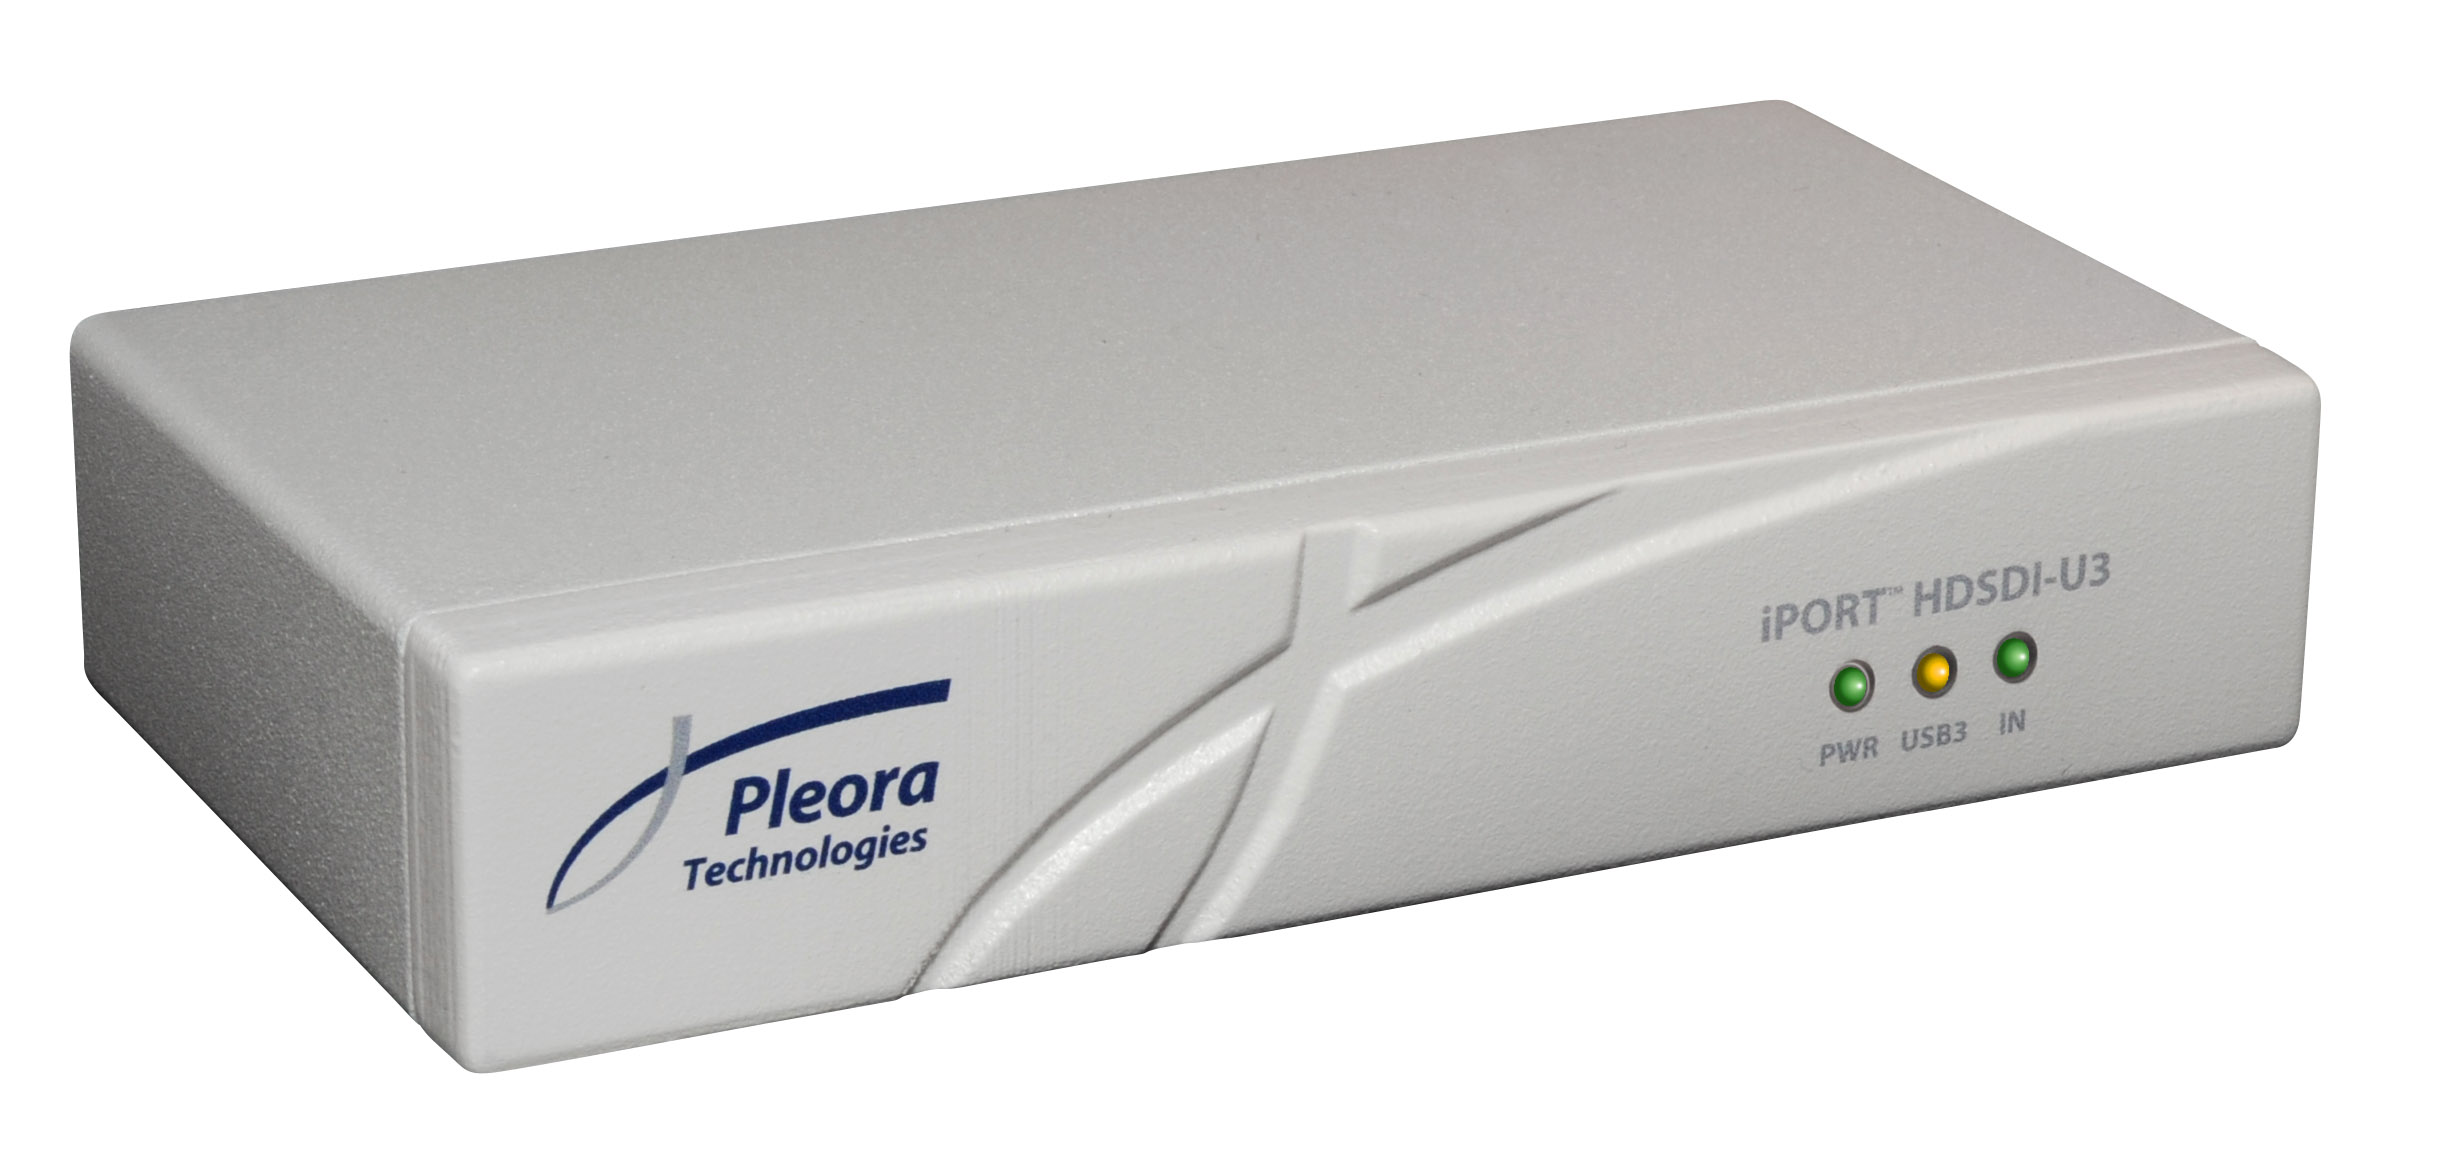 Pleora科技公司推出新的视频接口产品以简化成像系统